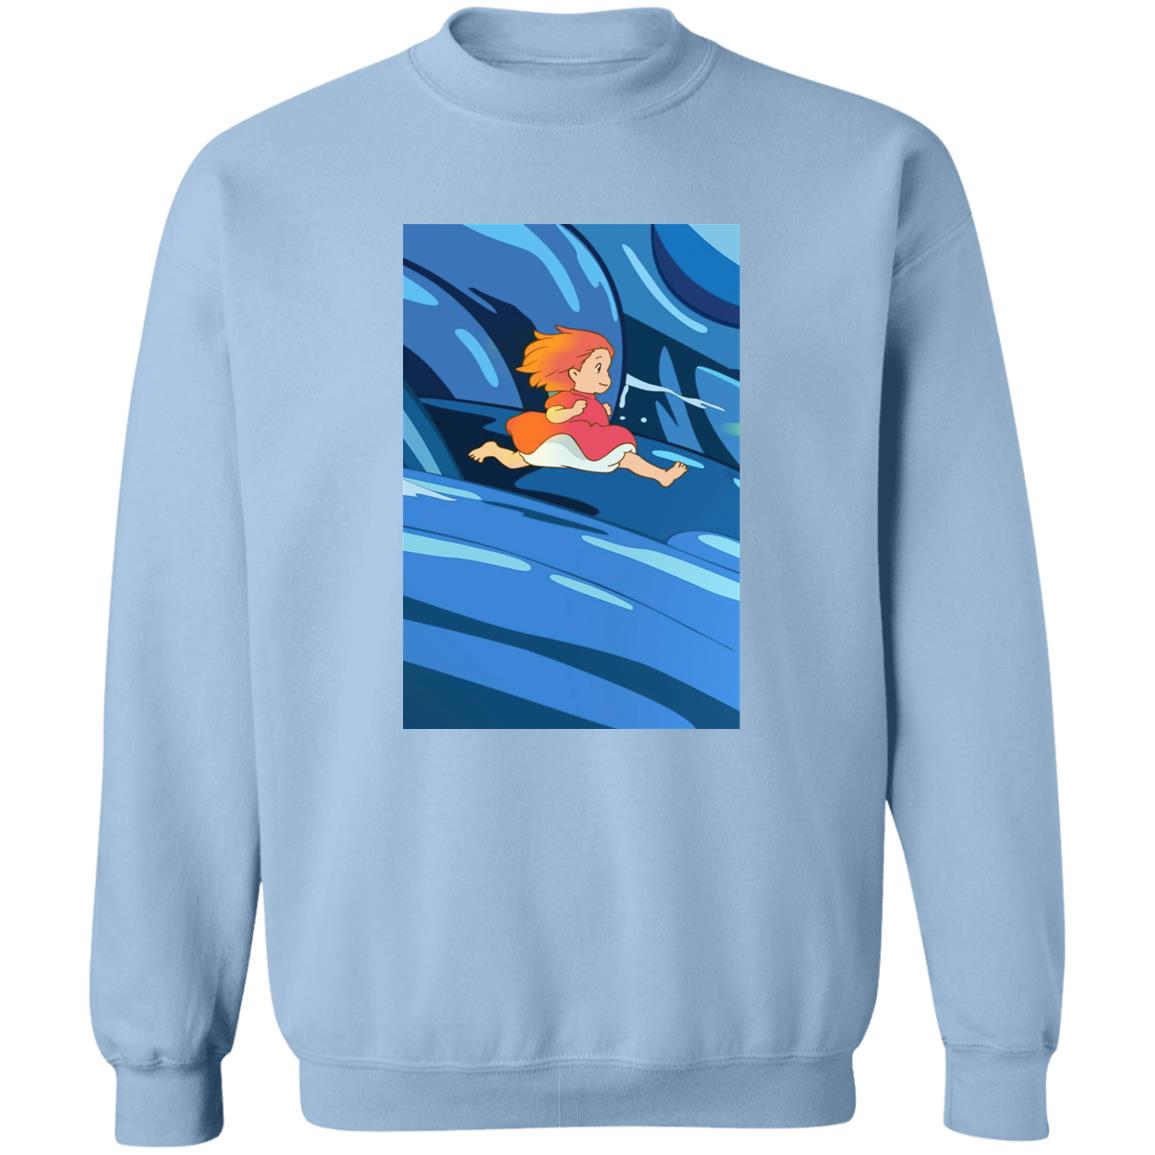 Ponyo Upon the Sea Sweatshirt